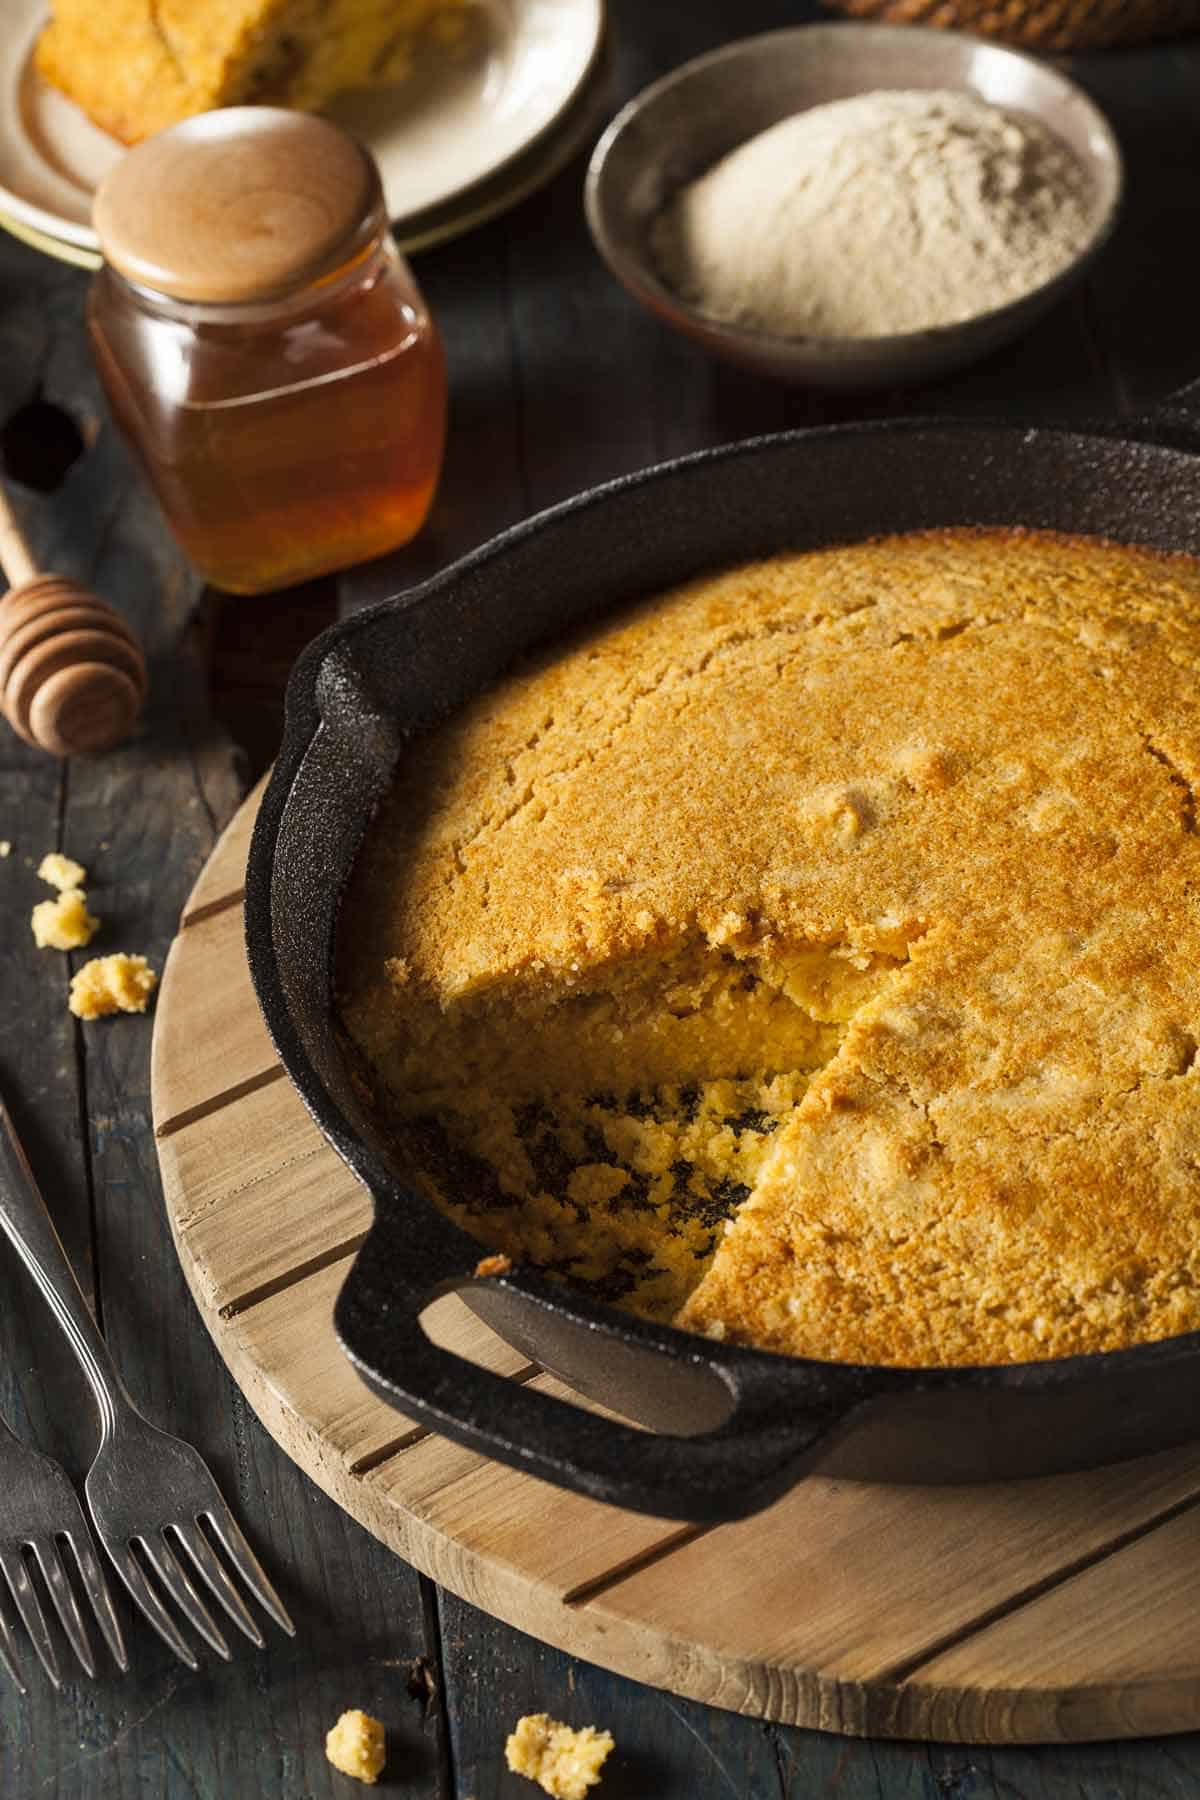 Pan of cornbread with honey